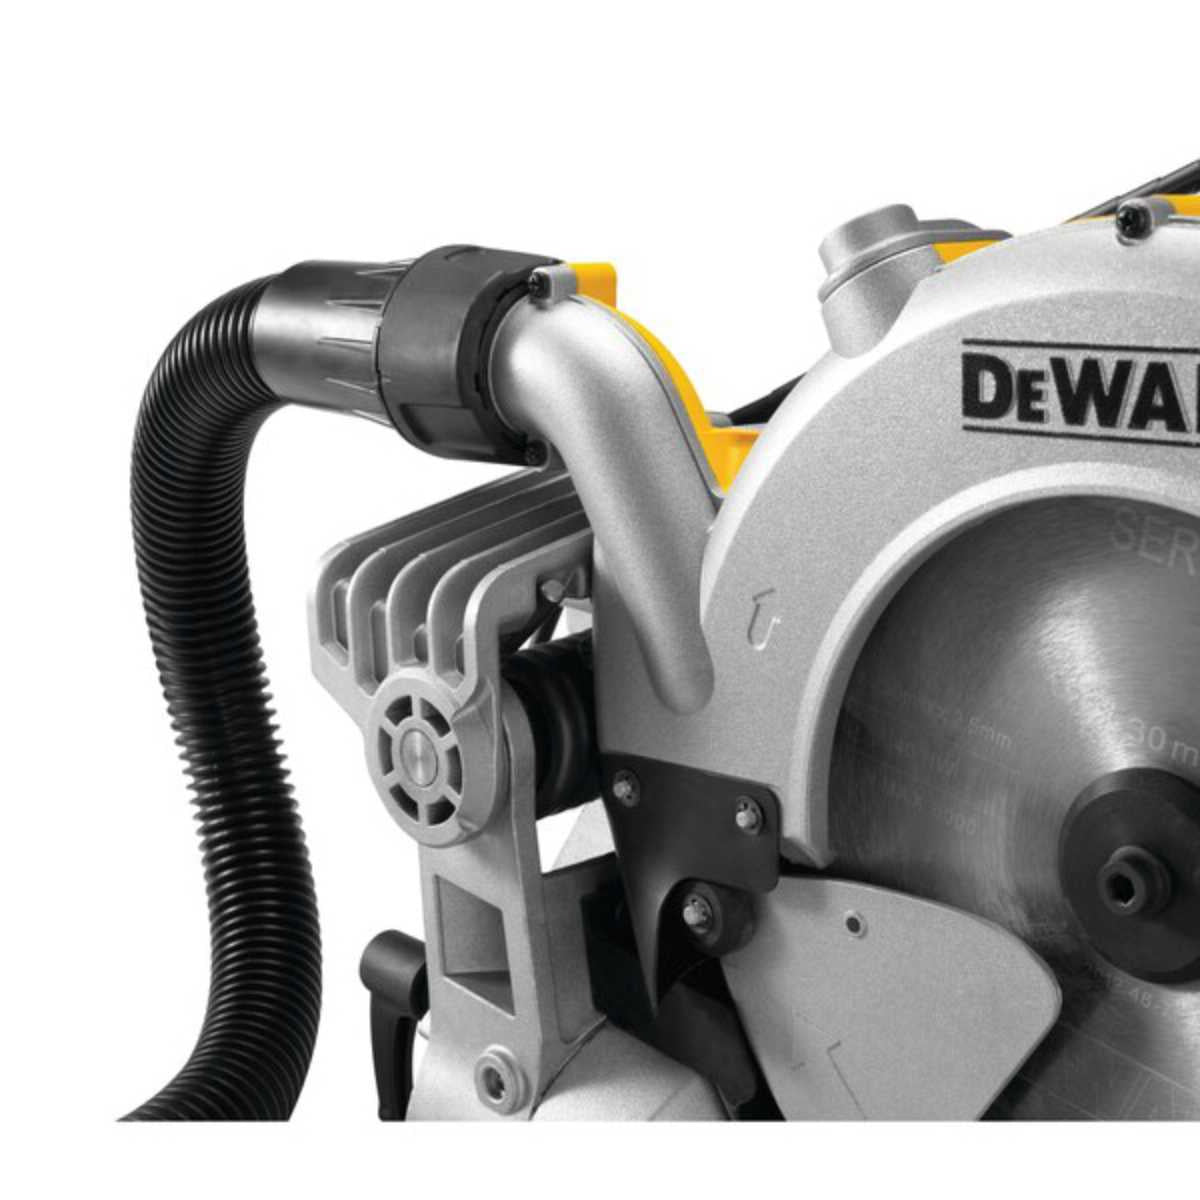 DEWALT Sliding Mitre Saw 250mm with XPS DWS778 Power Tool Services